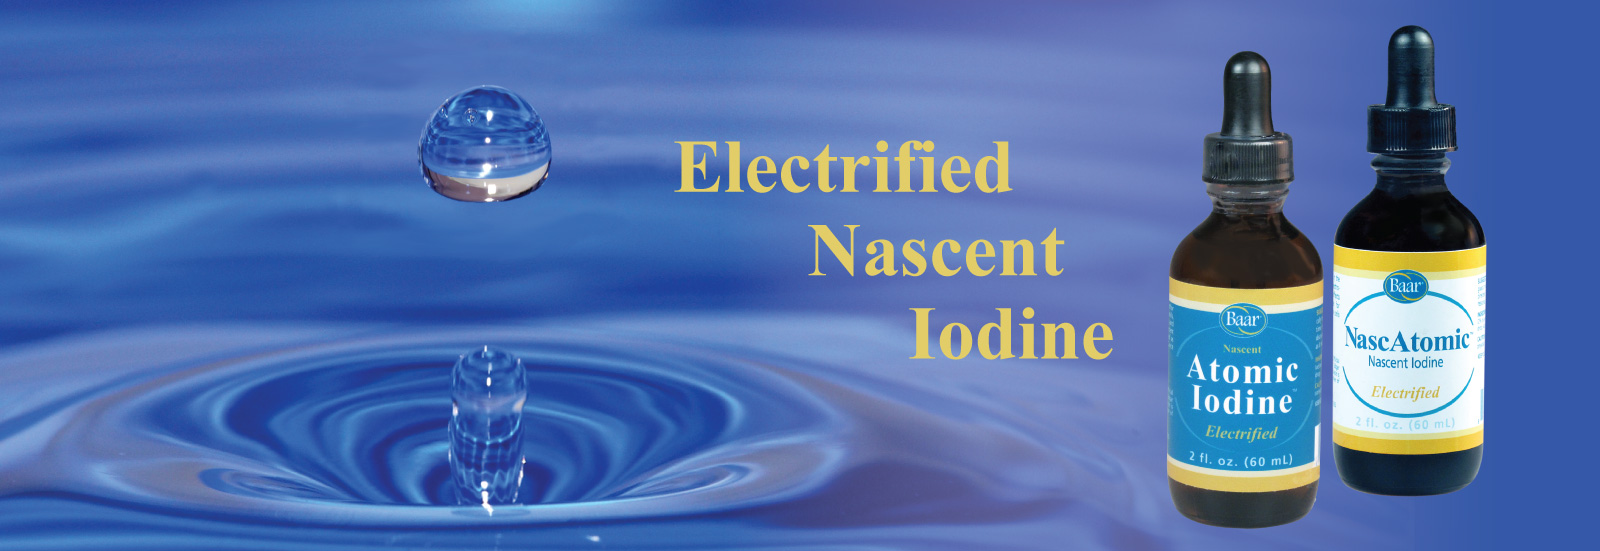 Electrified nascent iodine